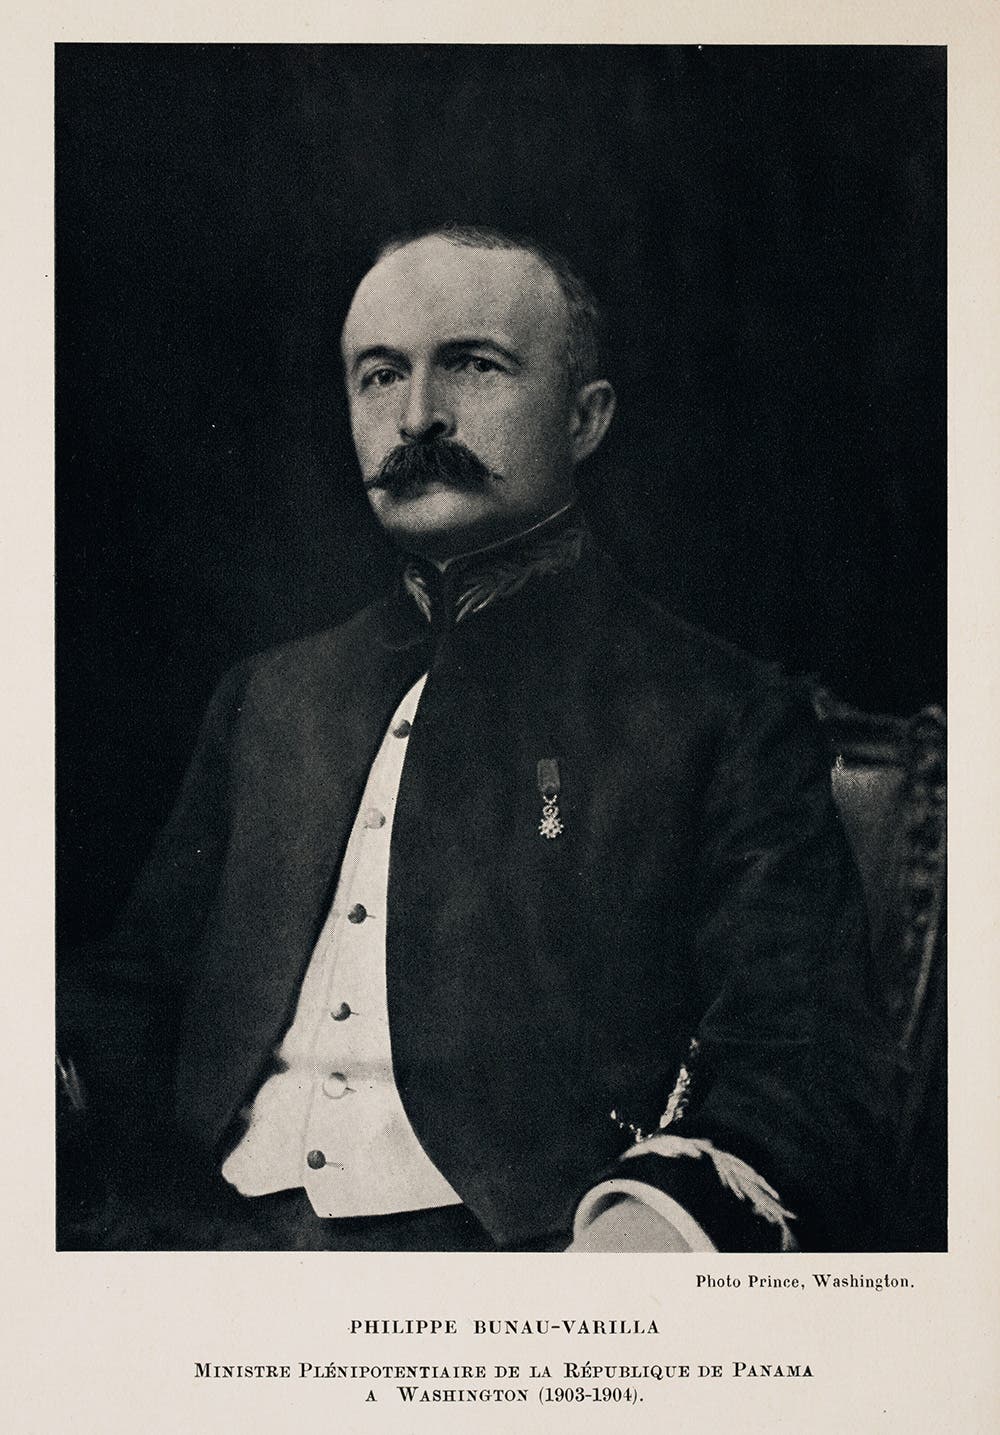 Photograph portrait of Philippe Bunau Varilla, 1903-1904.